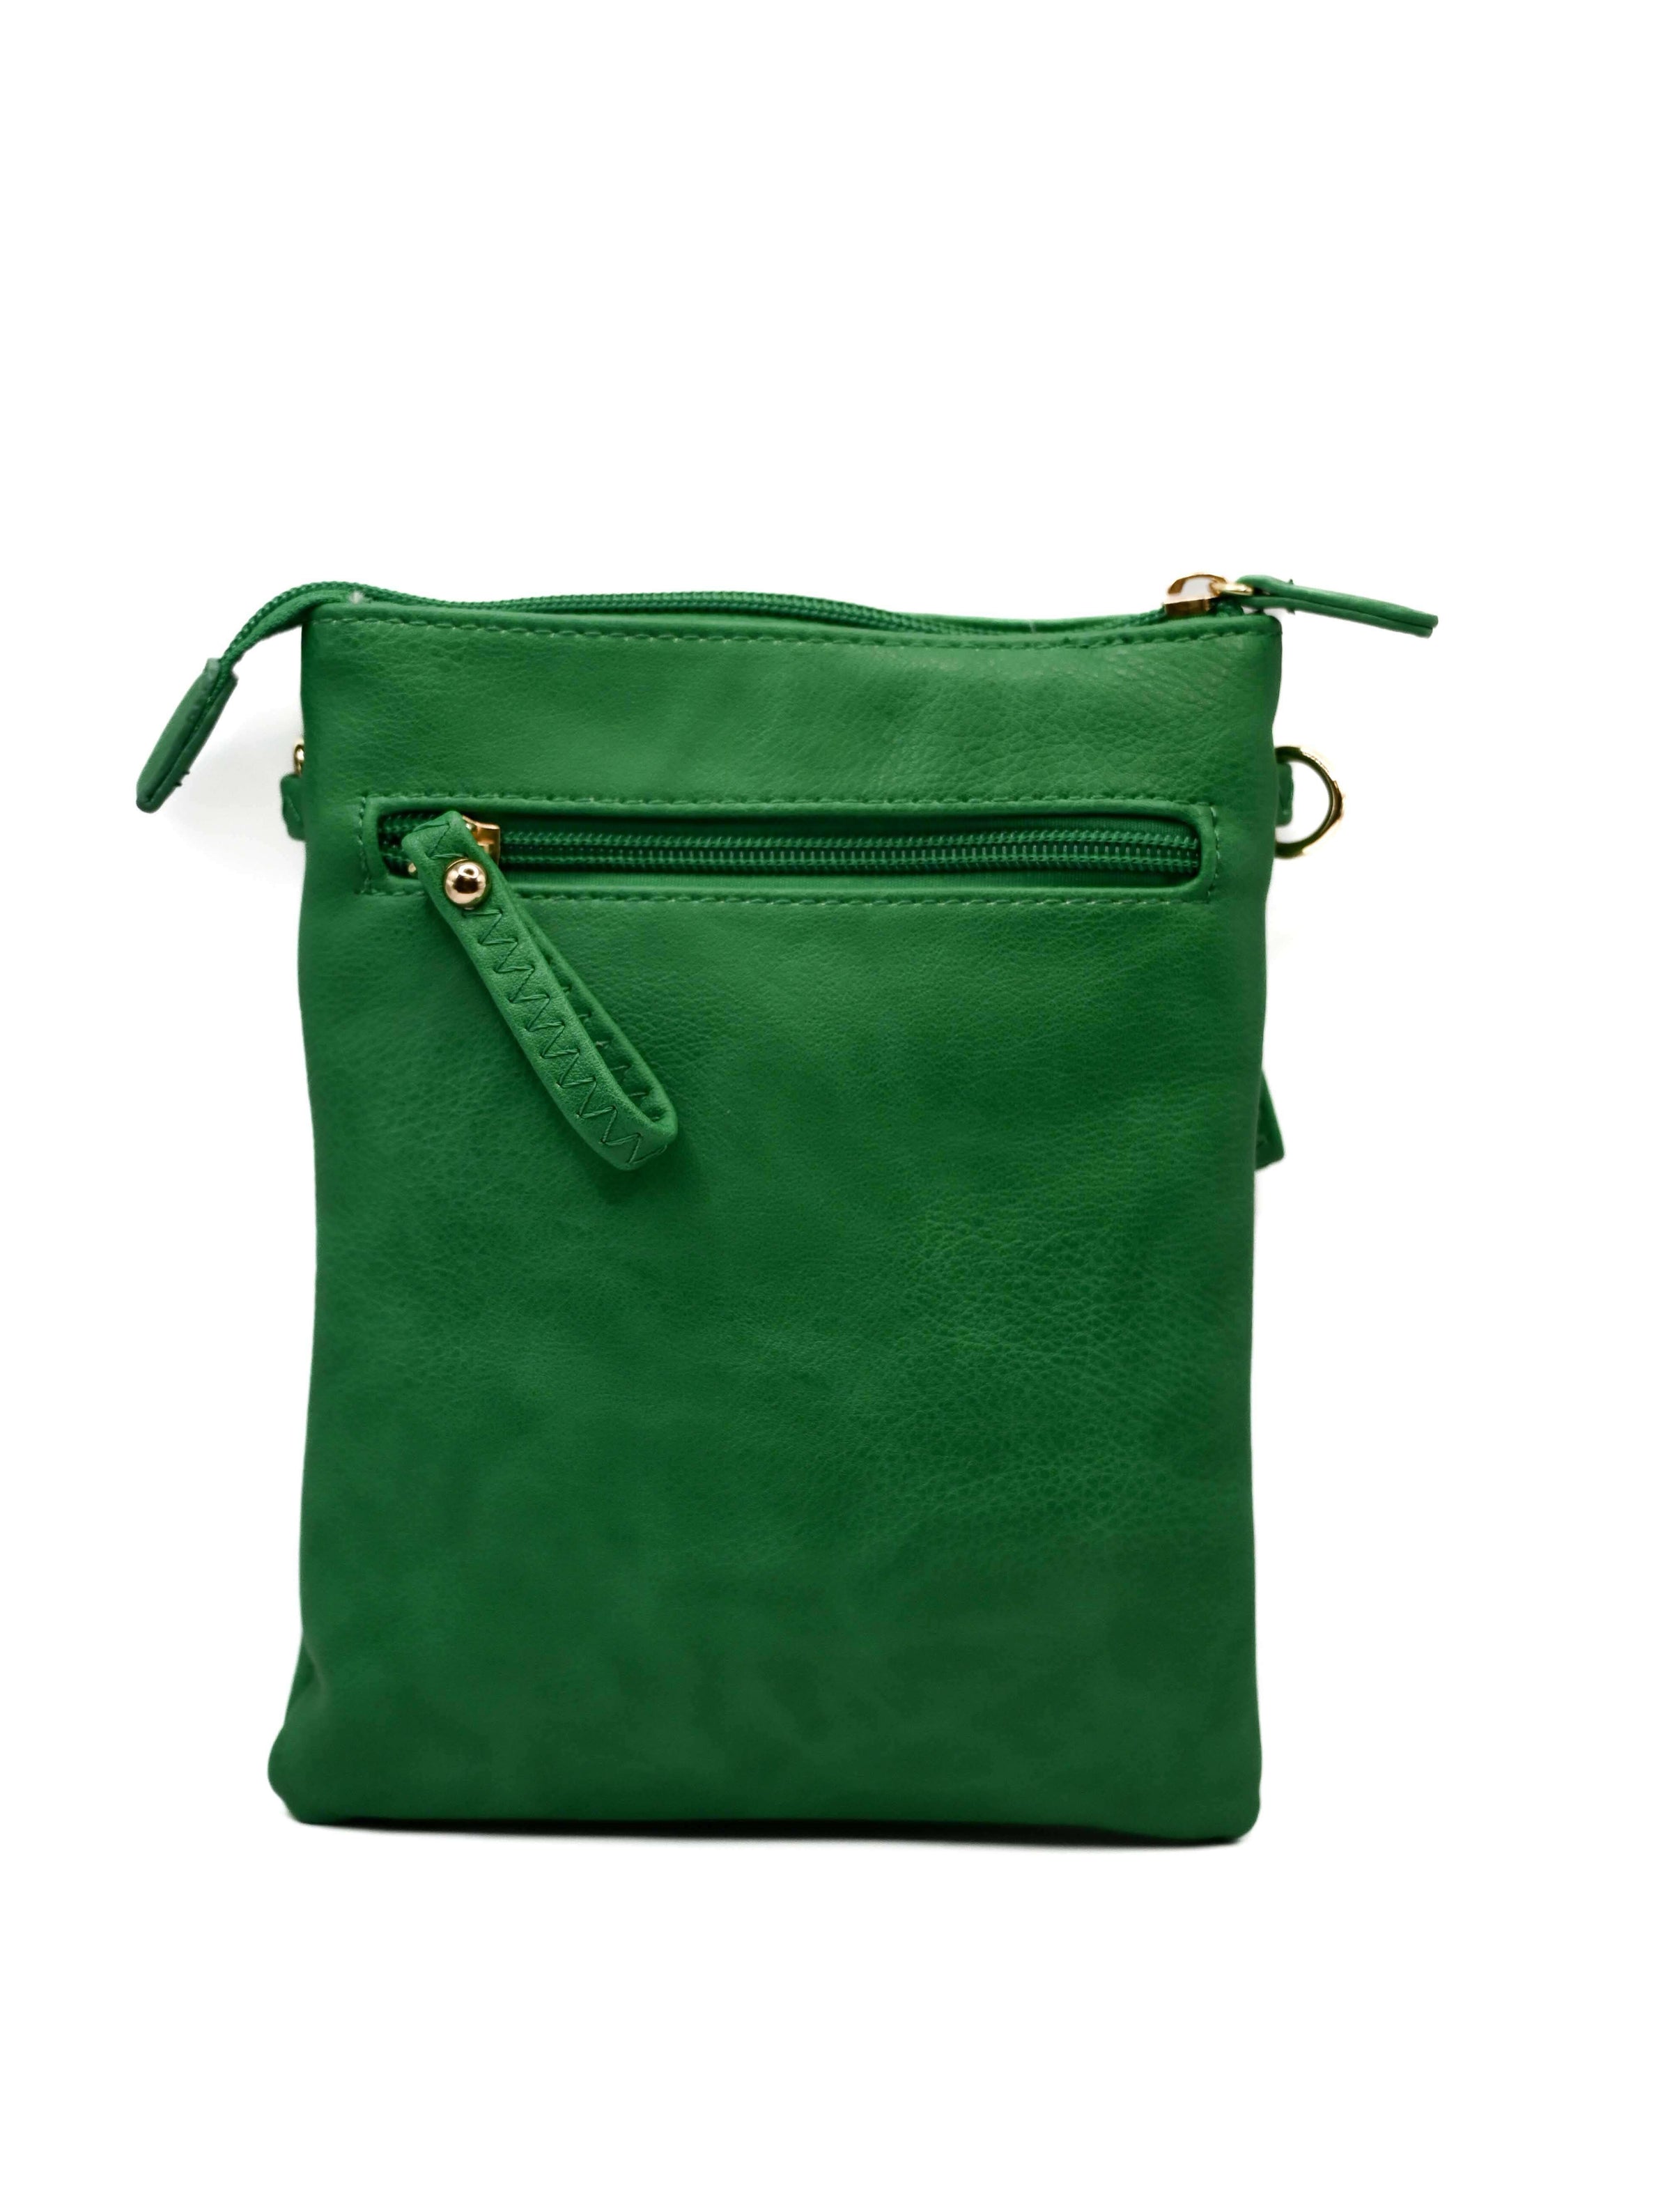 Crossbody Zipper Bag in Green